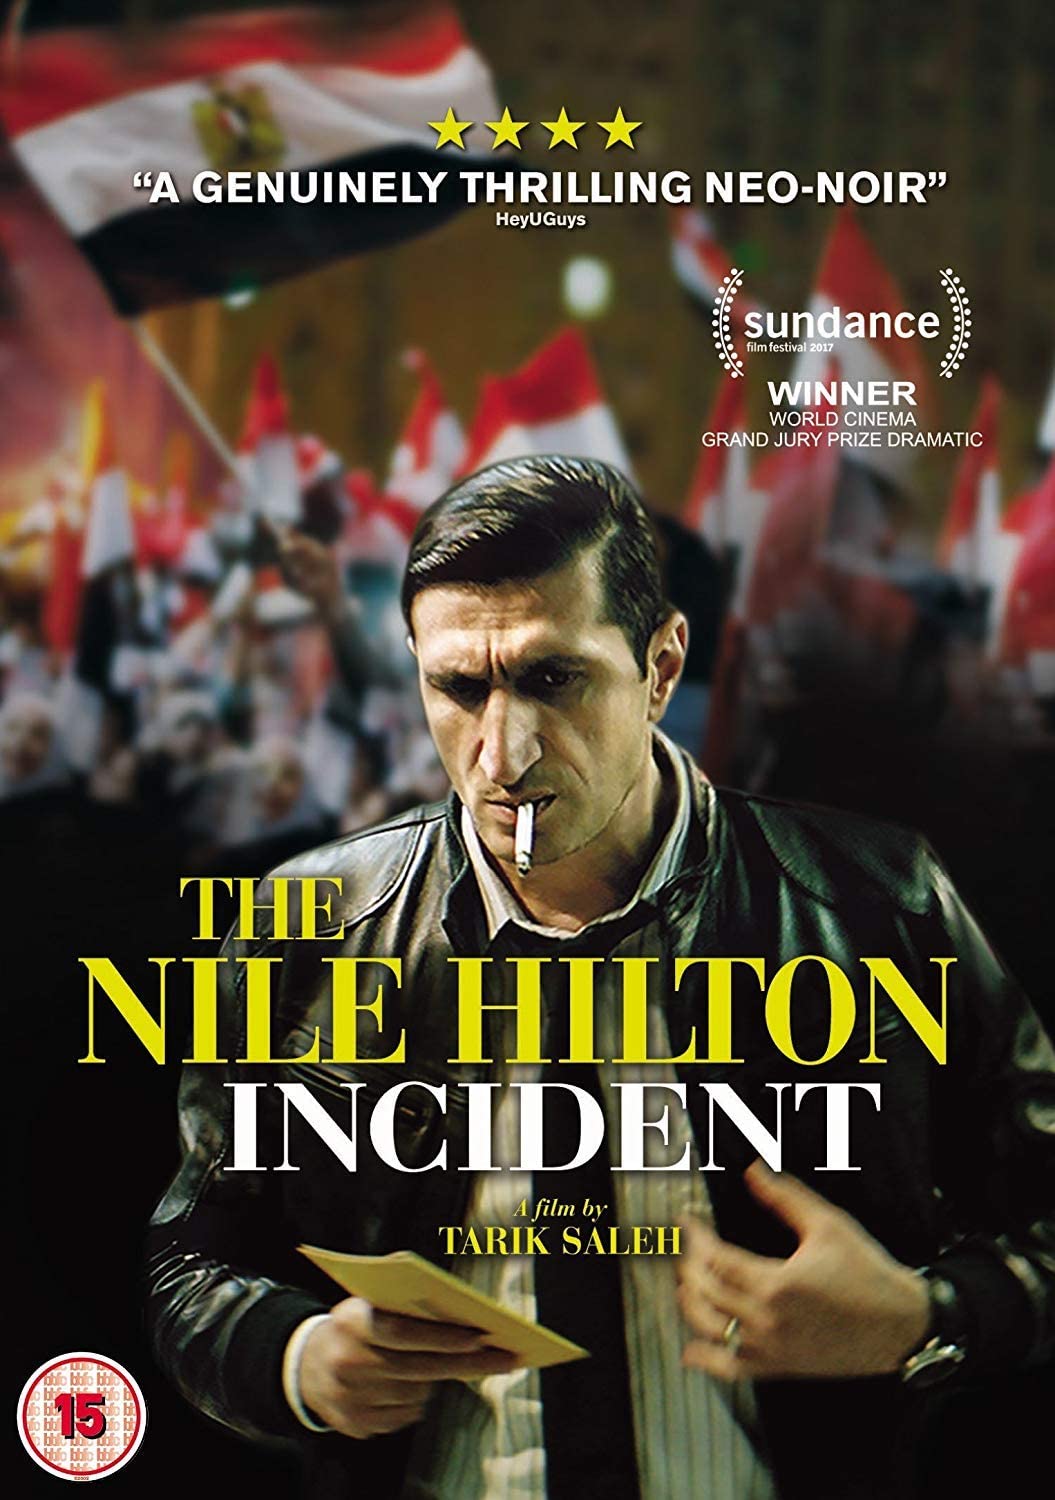 The Nile Hilton Incident - Thriller/Drama [DVD]